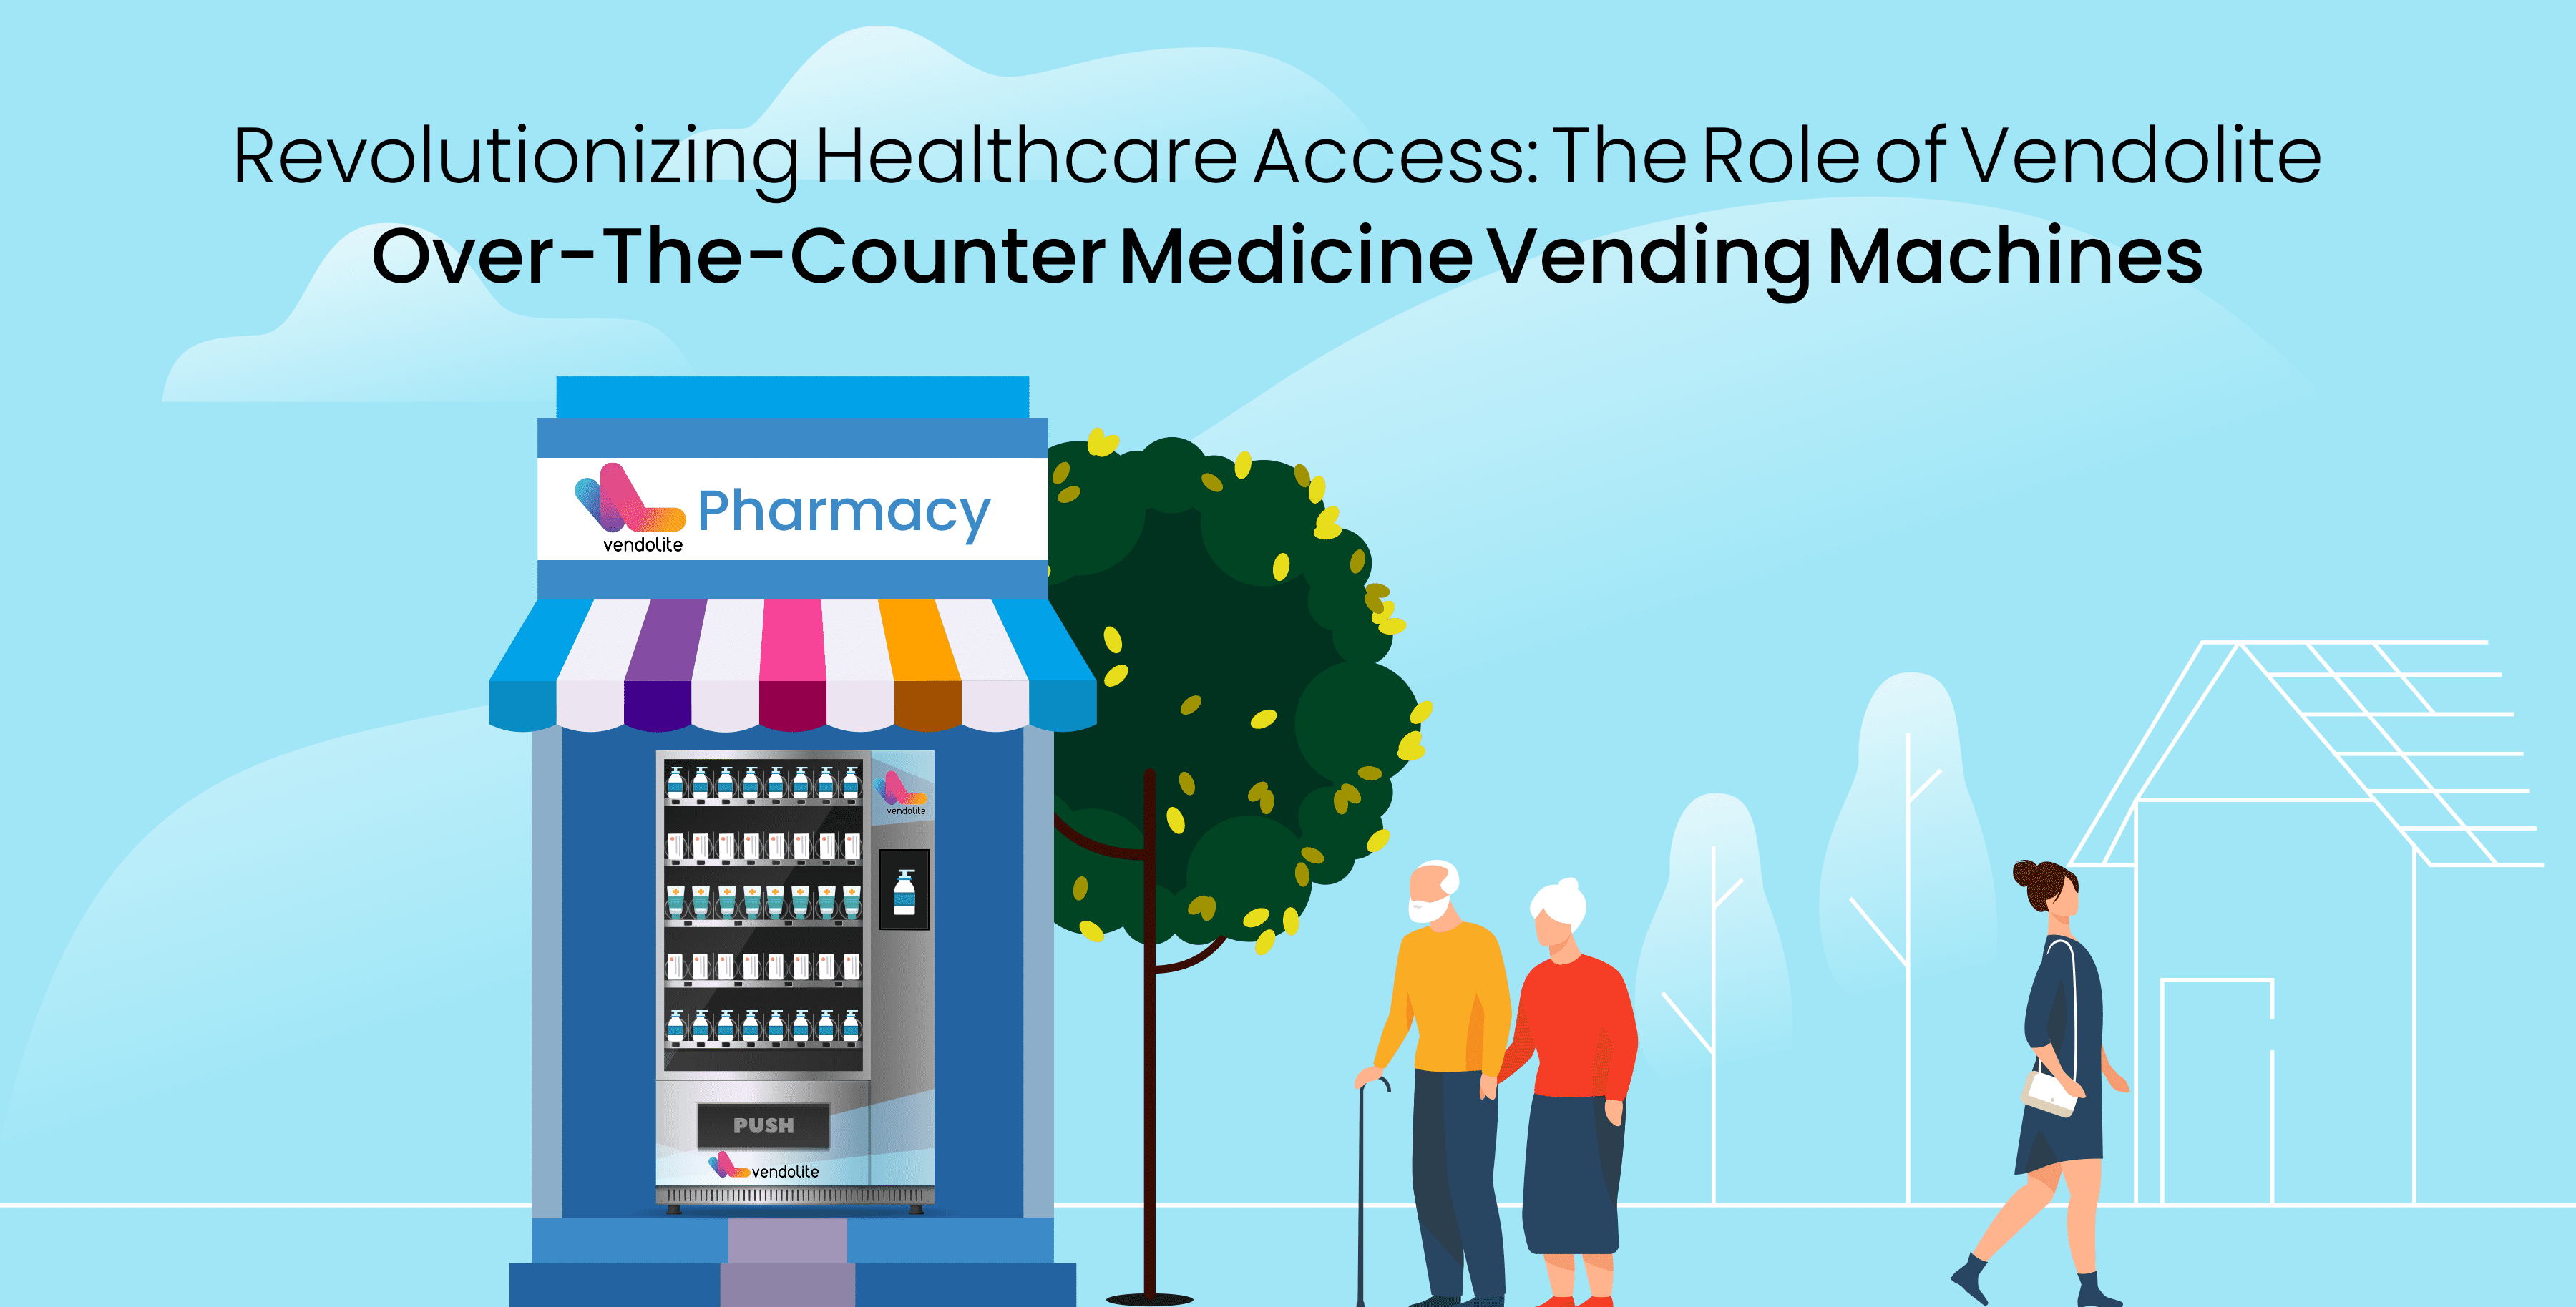 The Role of Vendolite Over-The-Counter Medicine Vending Machines